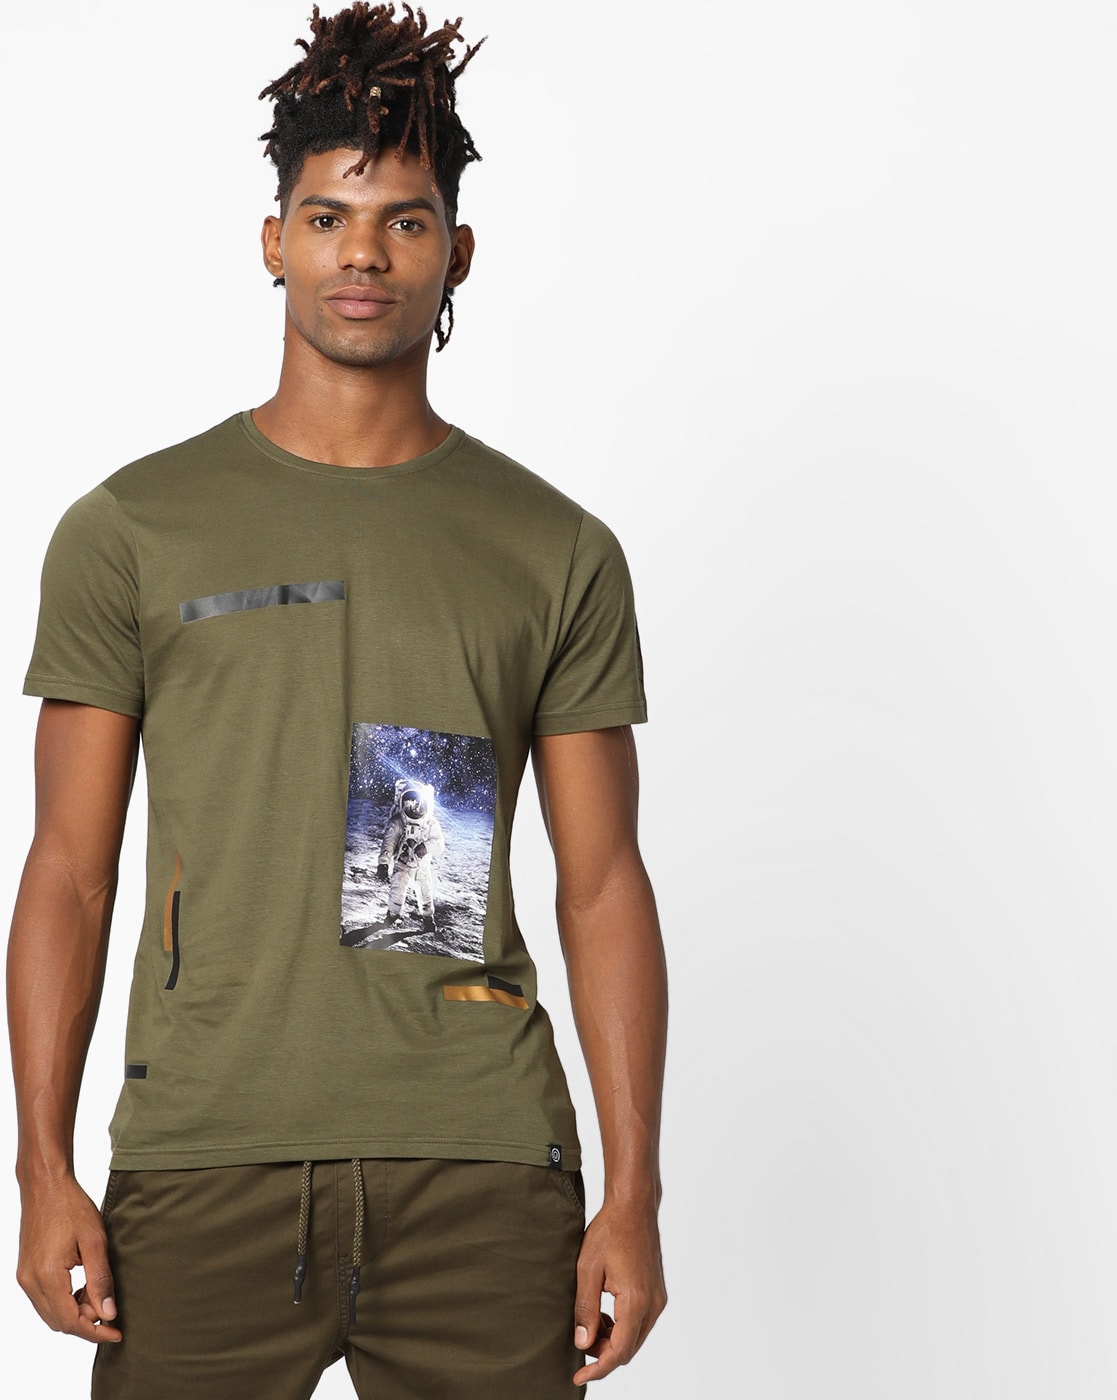 astronaut t shirt india